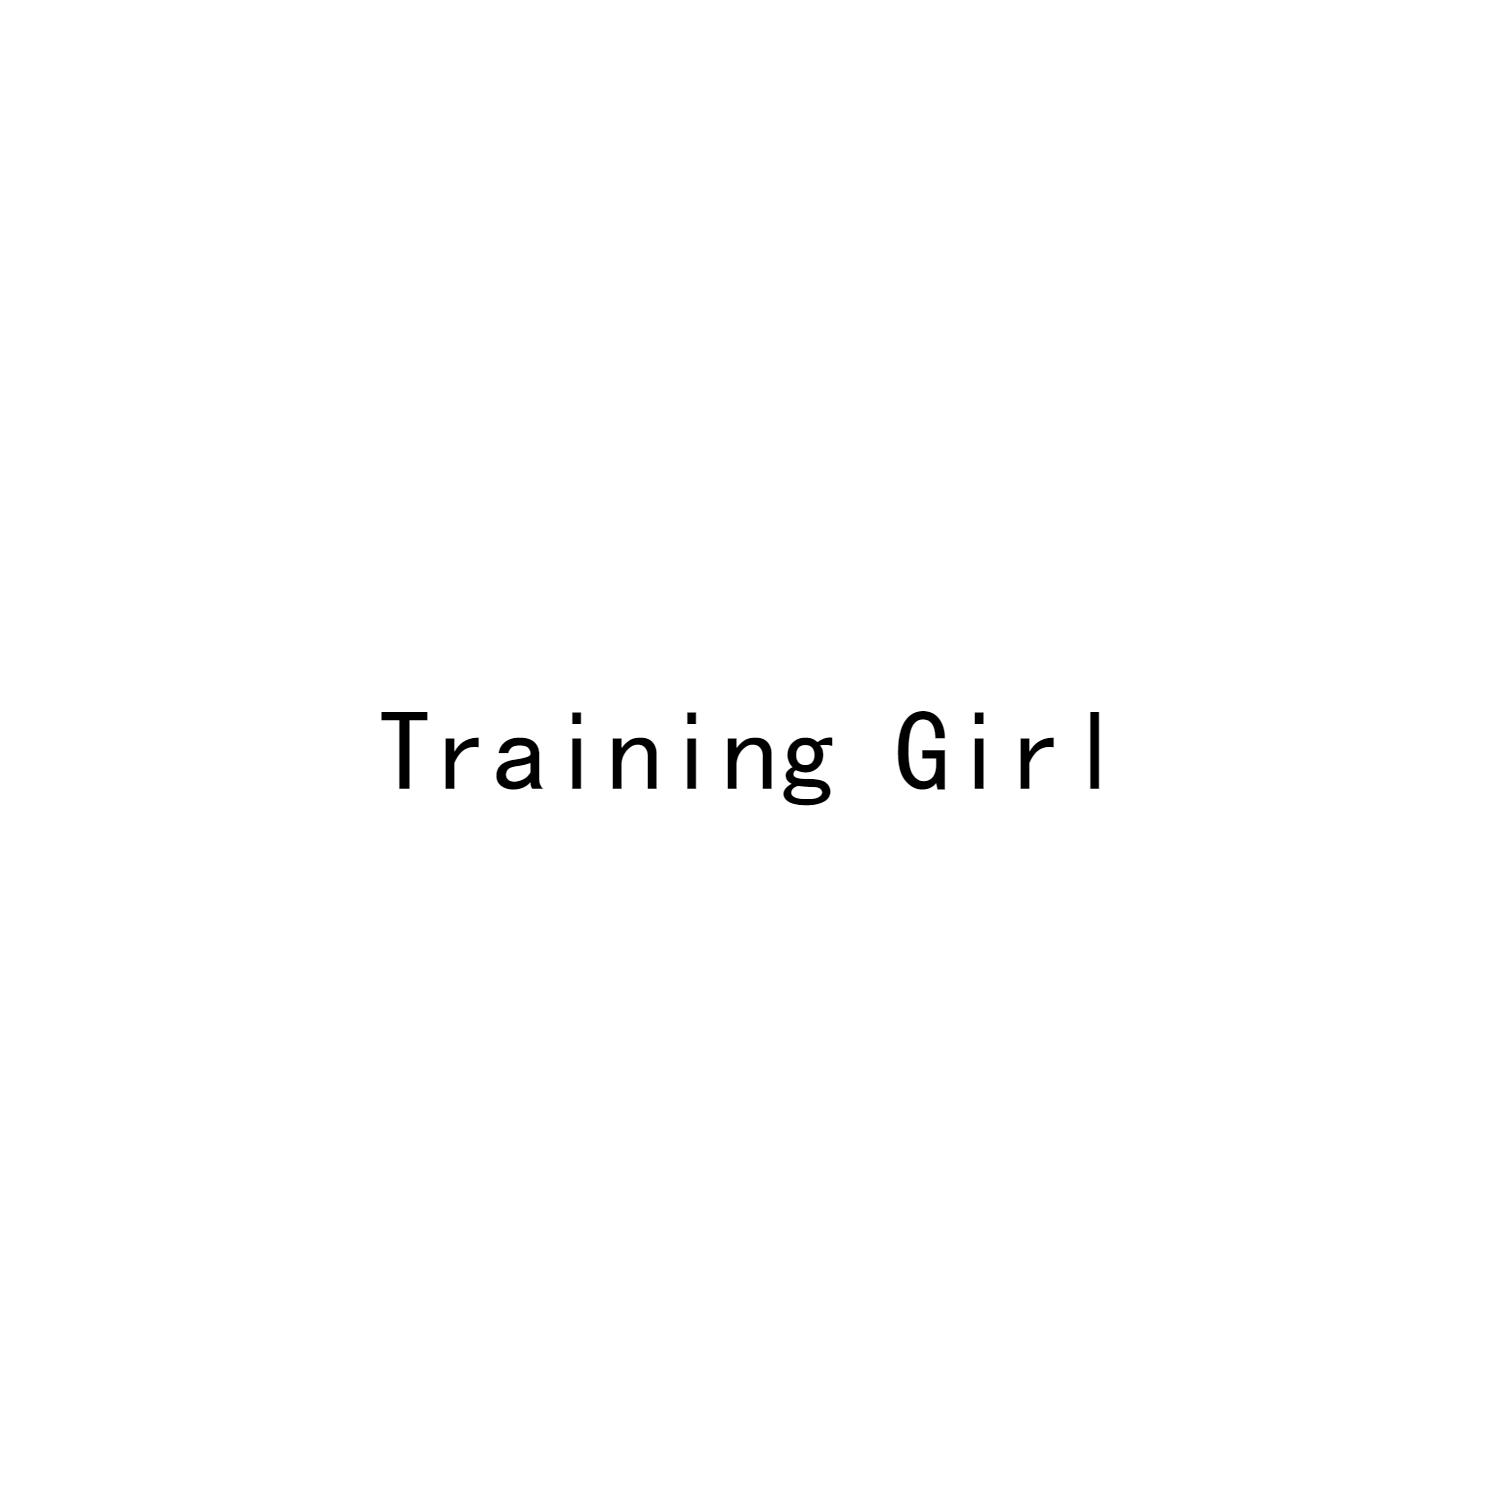 TRAINING GIRL